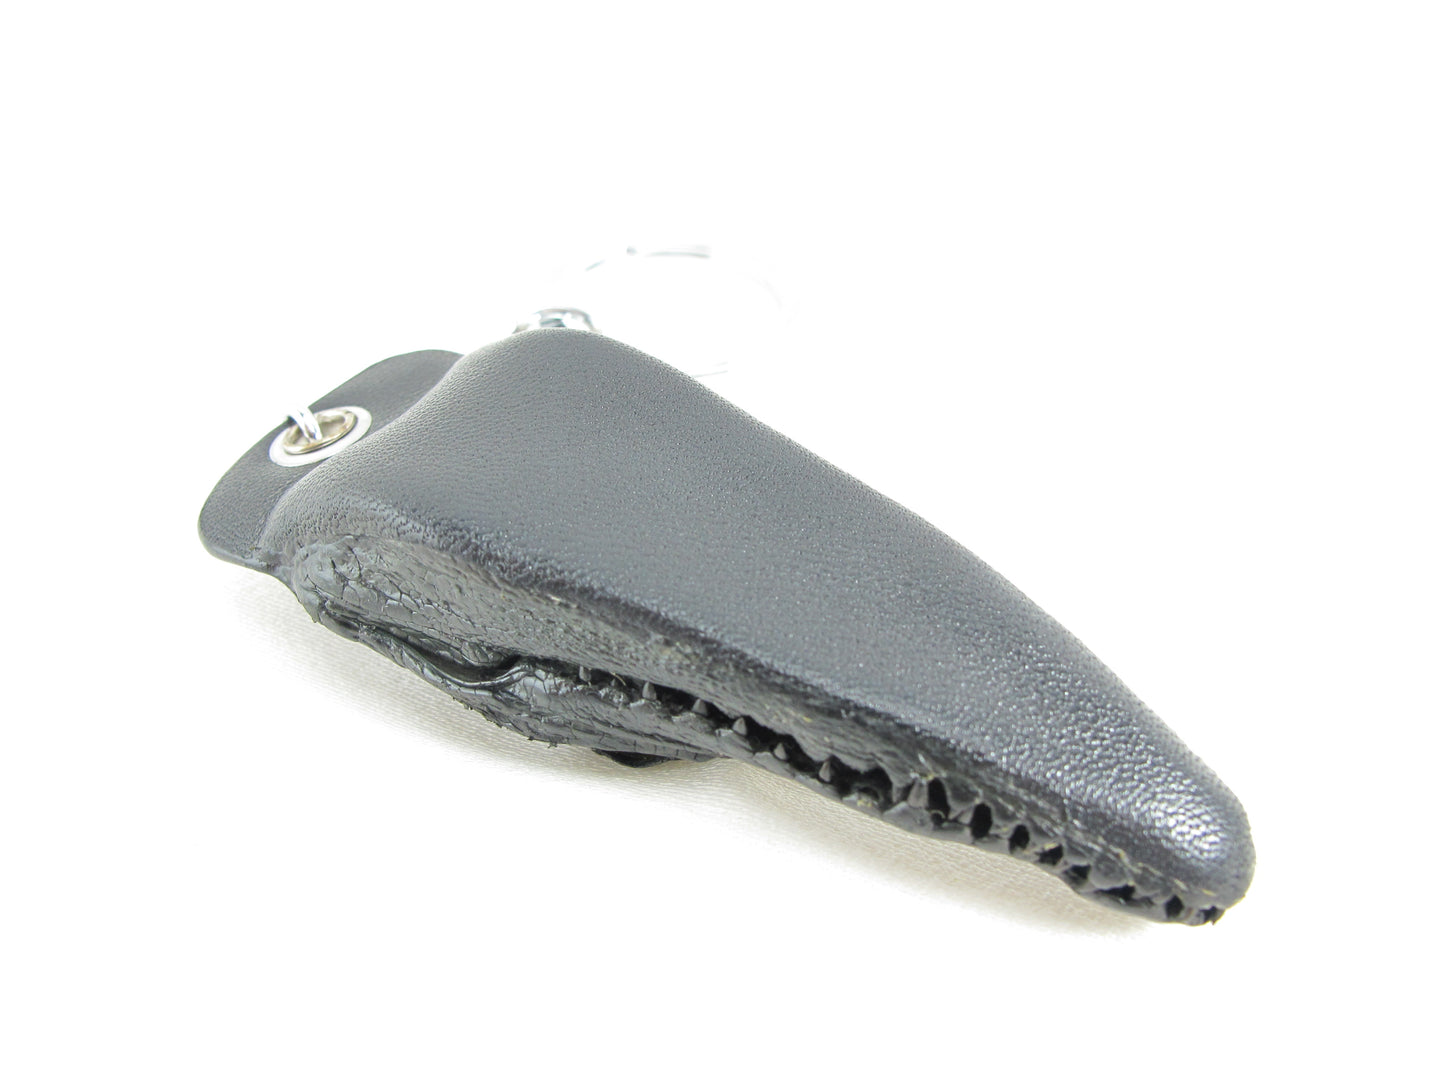 Genuine Caiman Crocodile Skin Leather Head Key Ring Keychain Holder